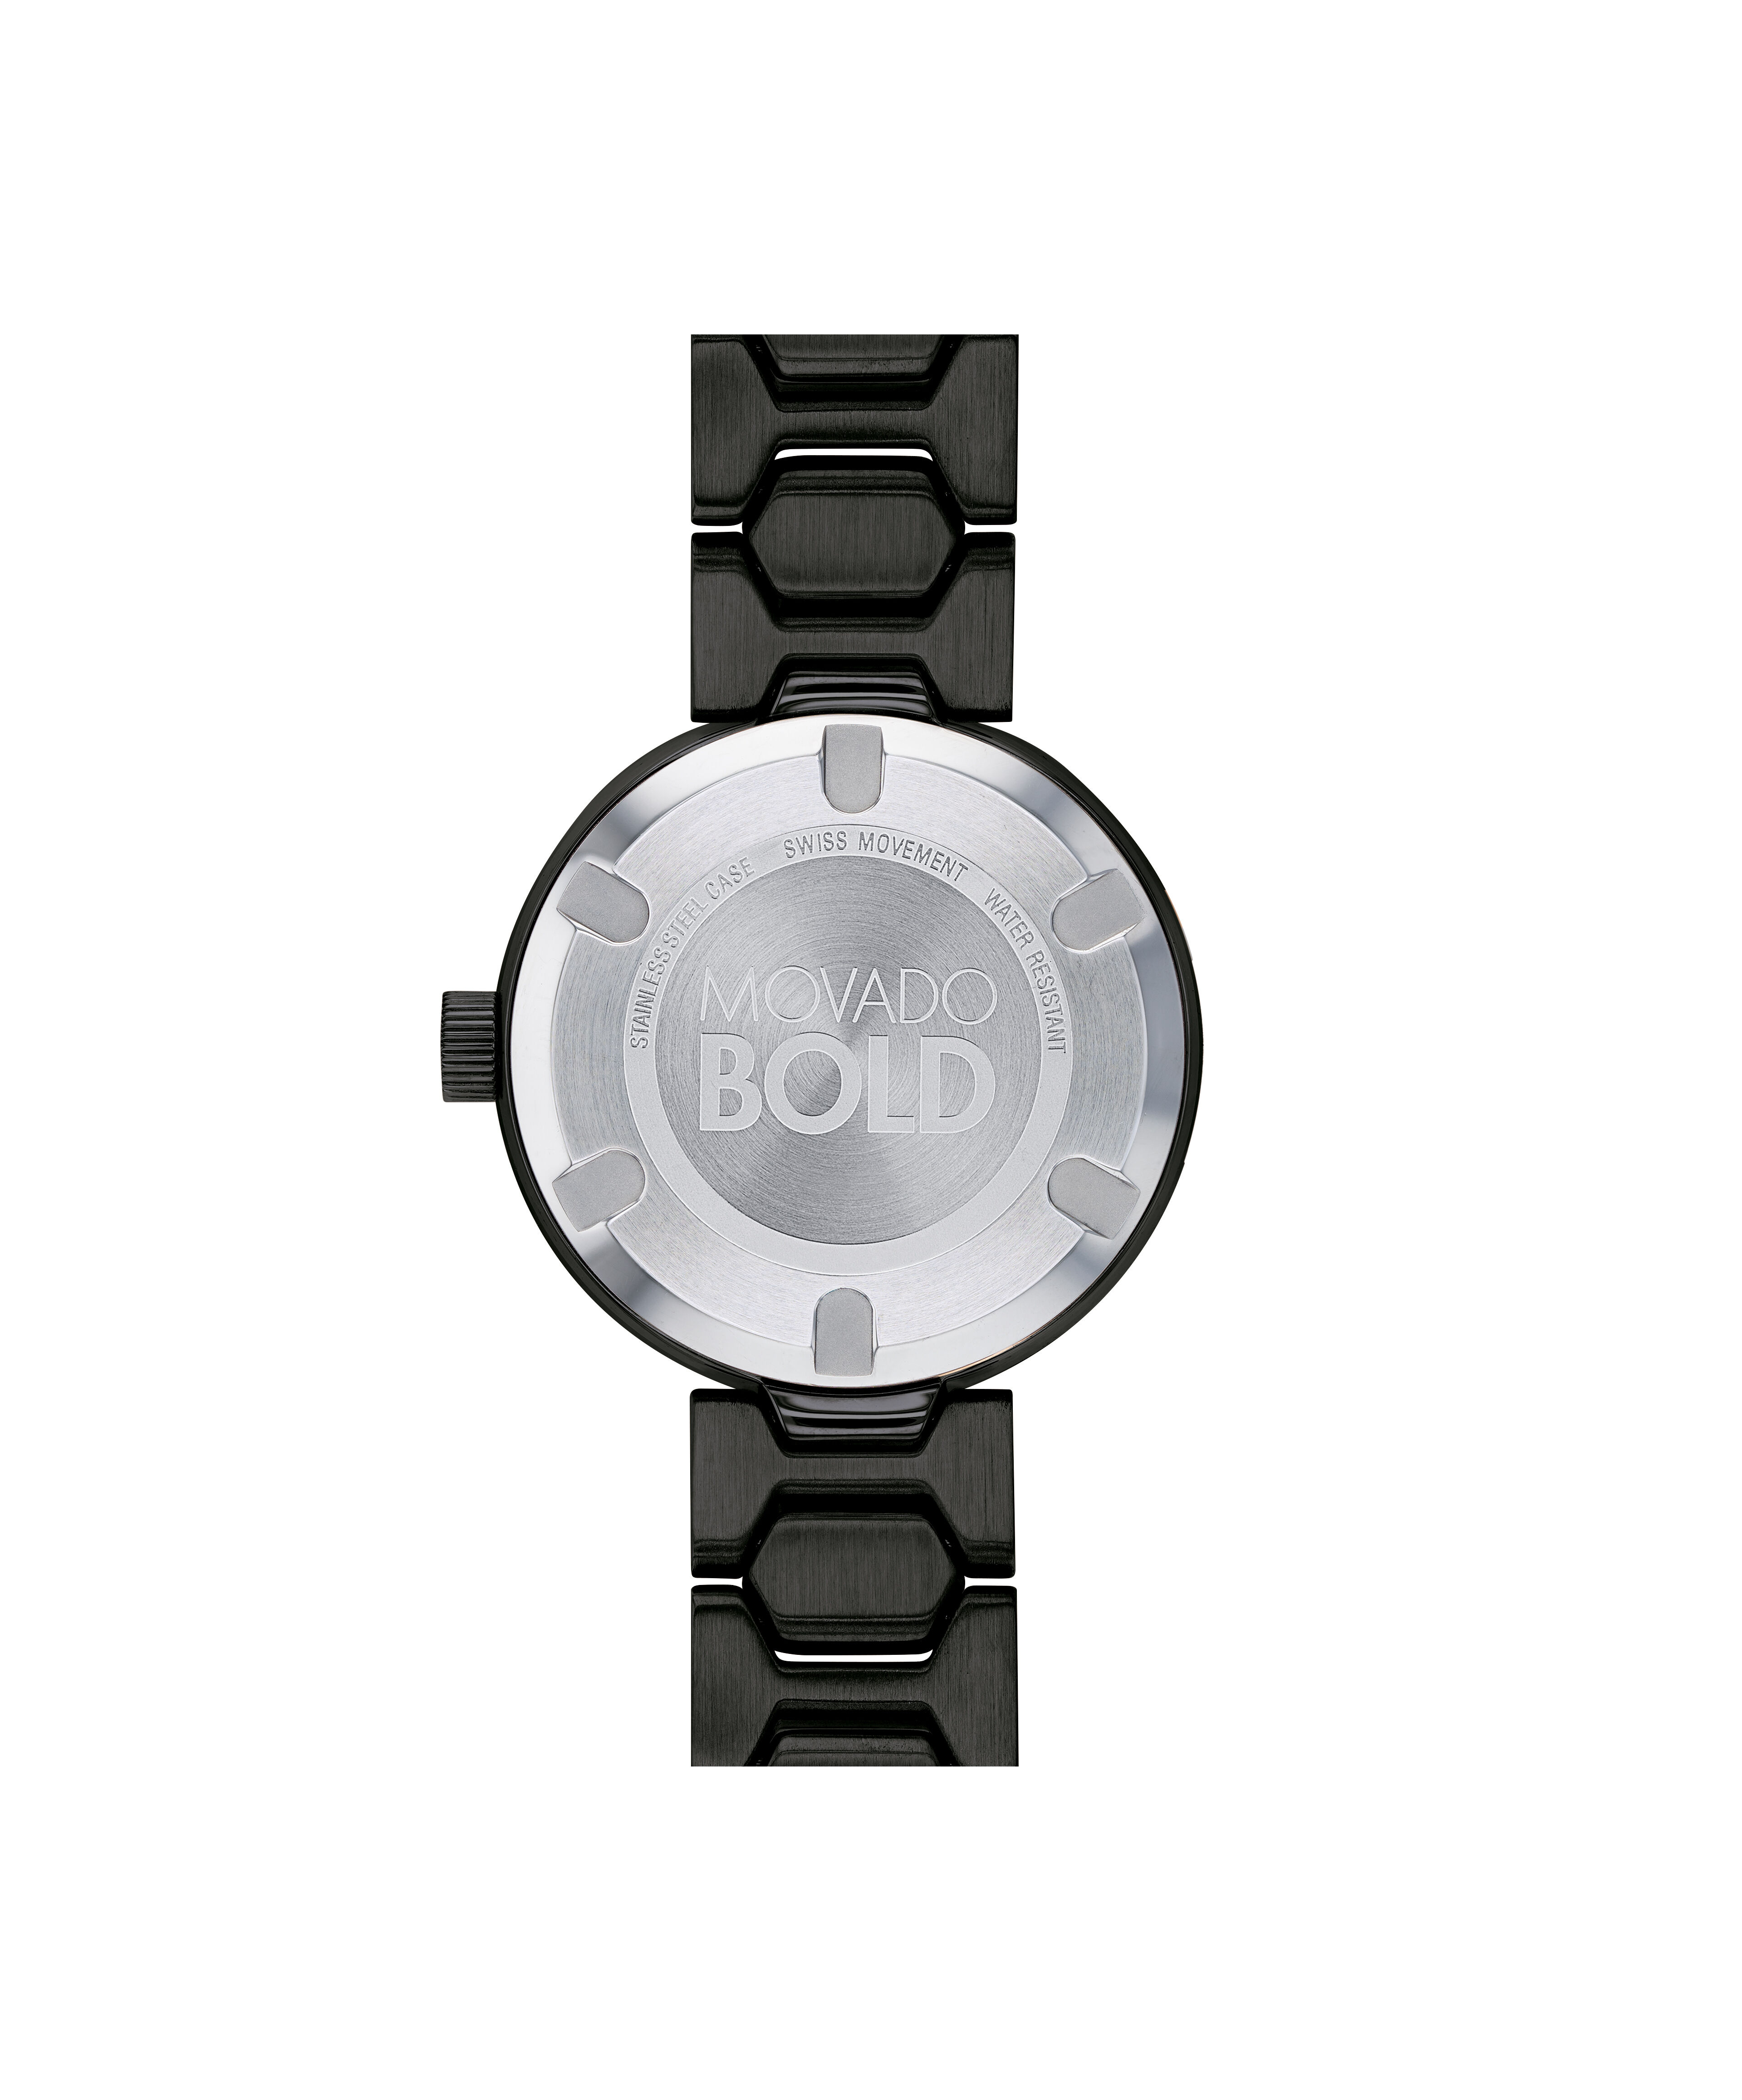 Replica Rolex Cosmograph Daytona Watch Ss Grey Face Rolexwatch17080198 Rolex